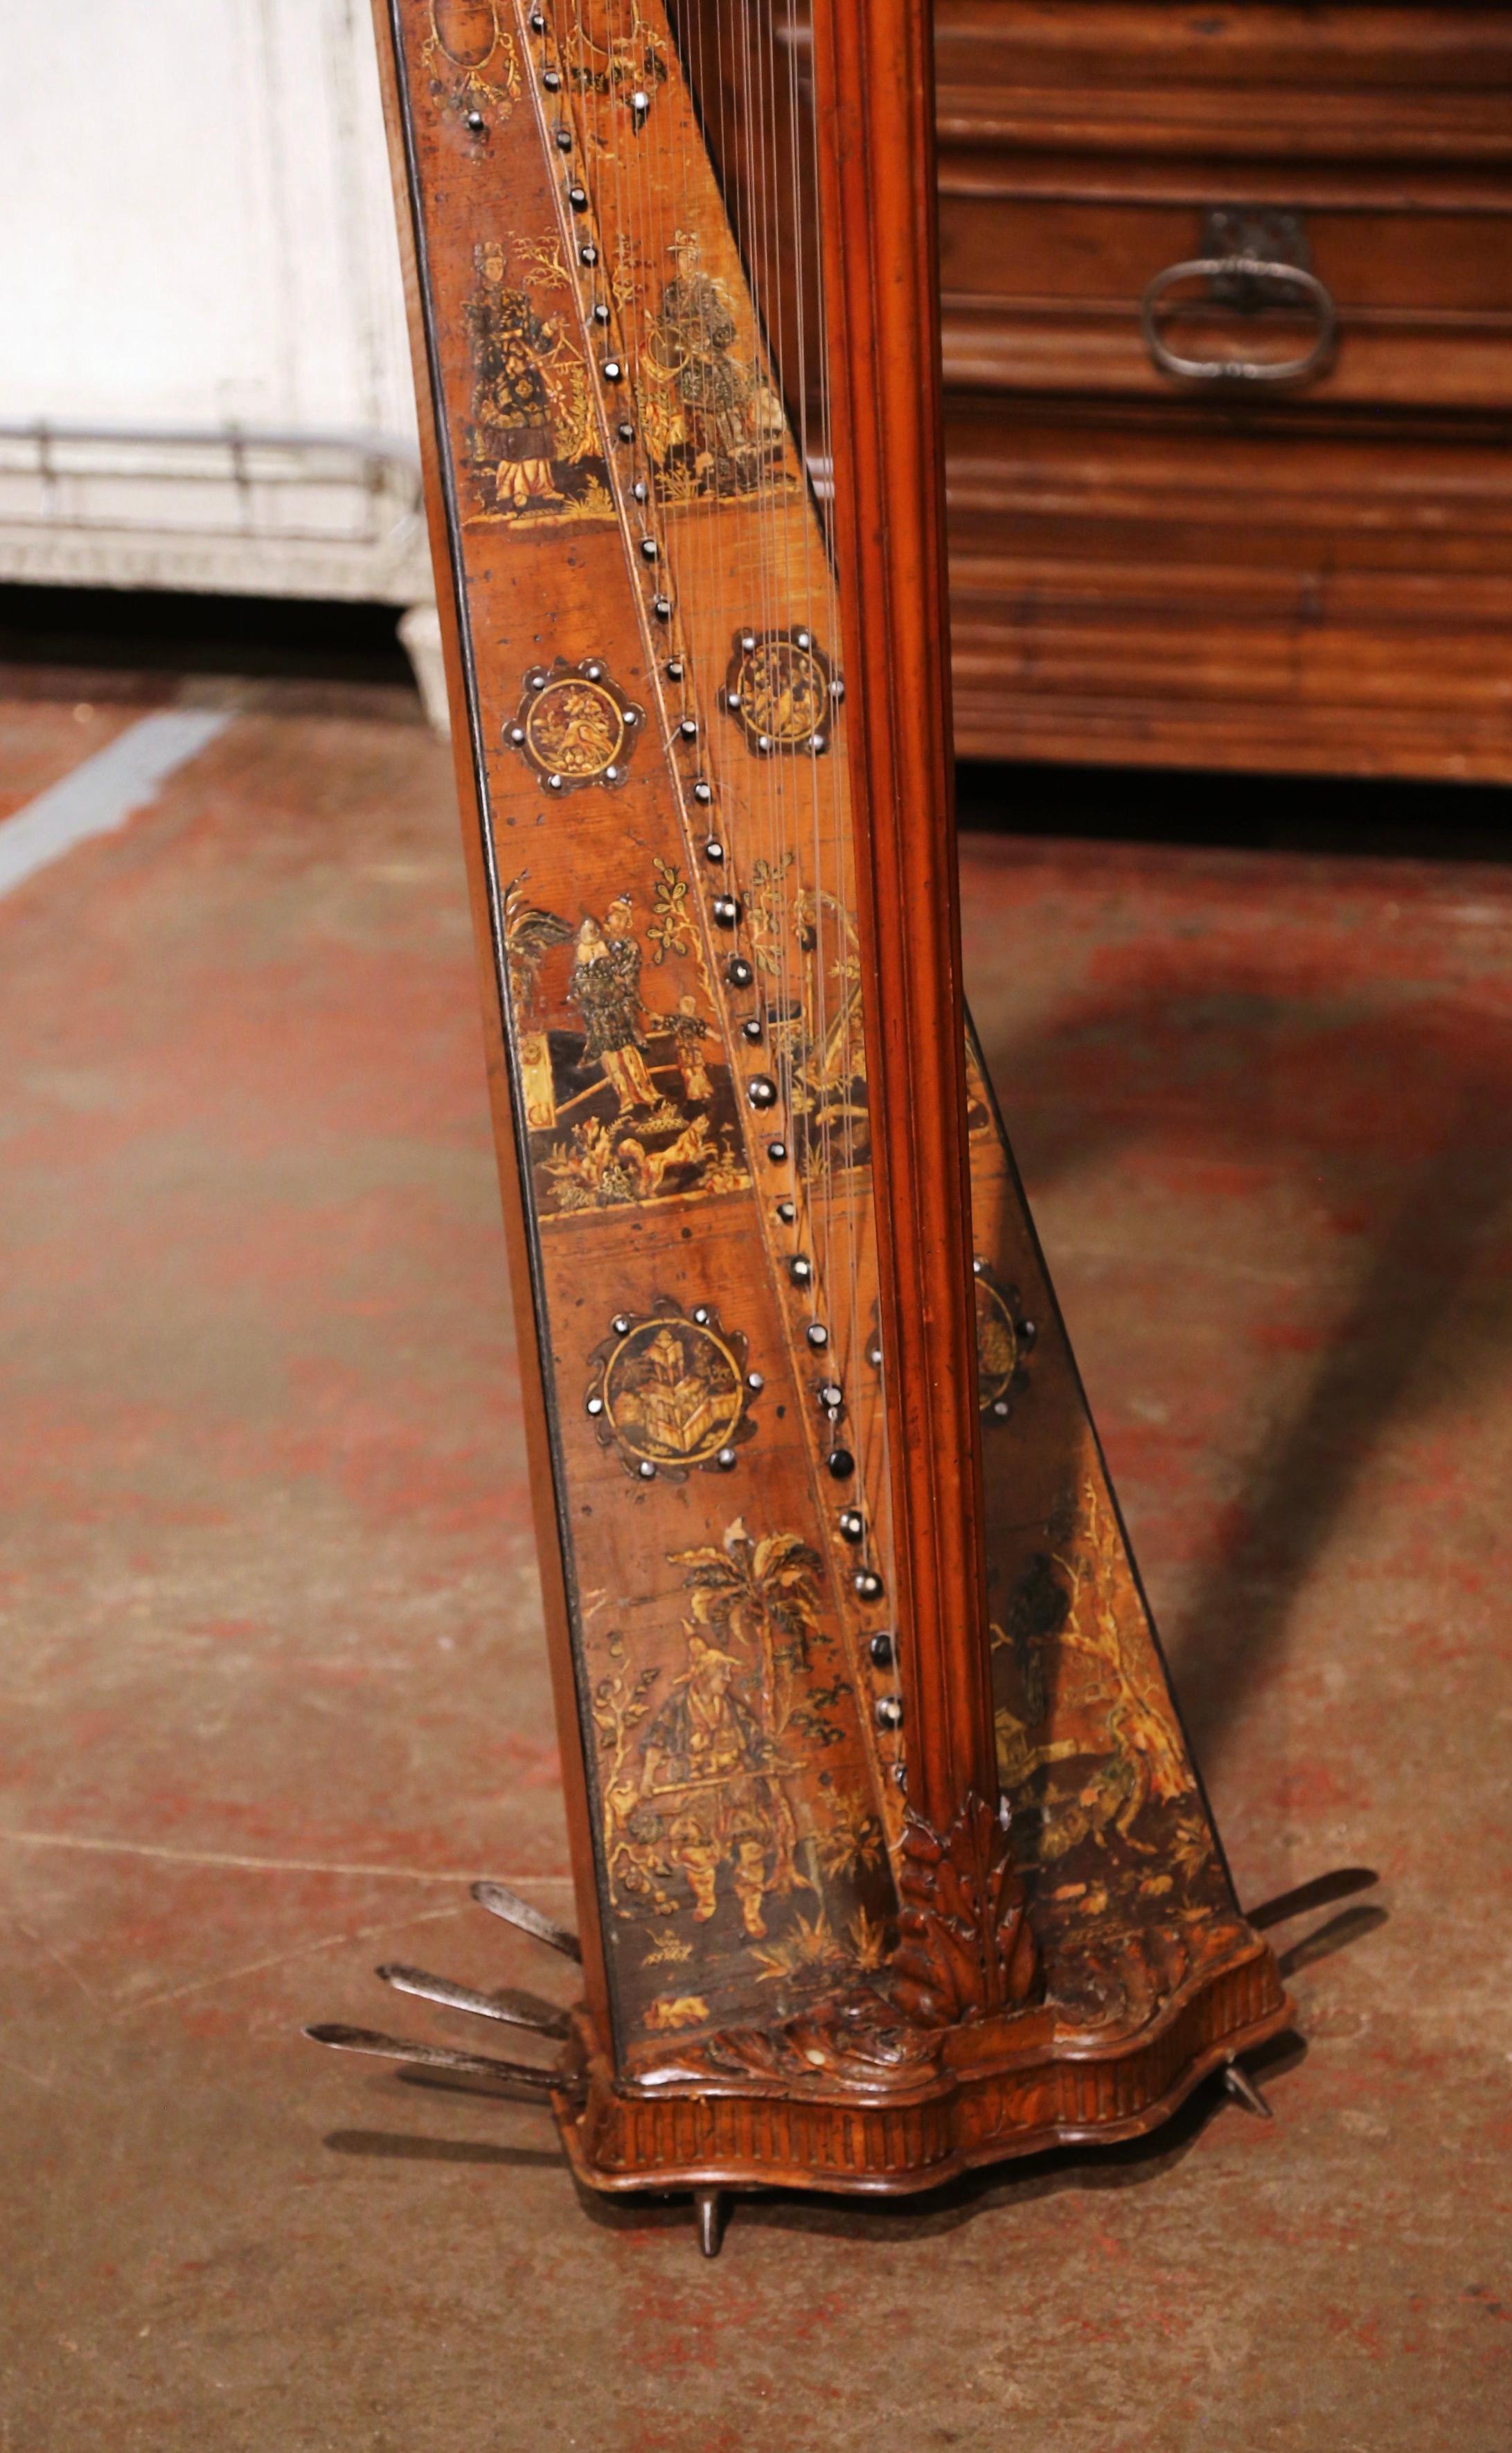 18th century harp